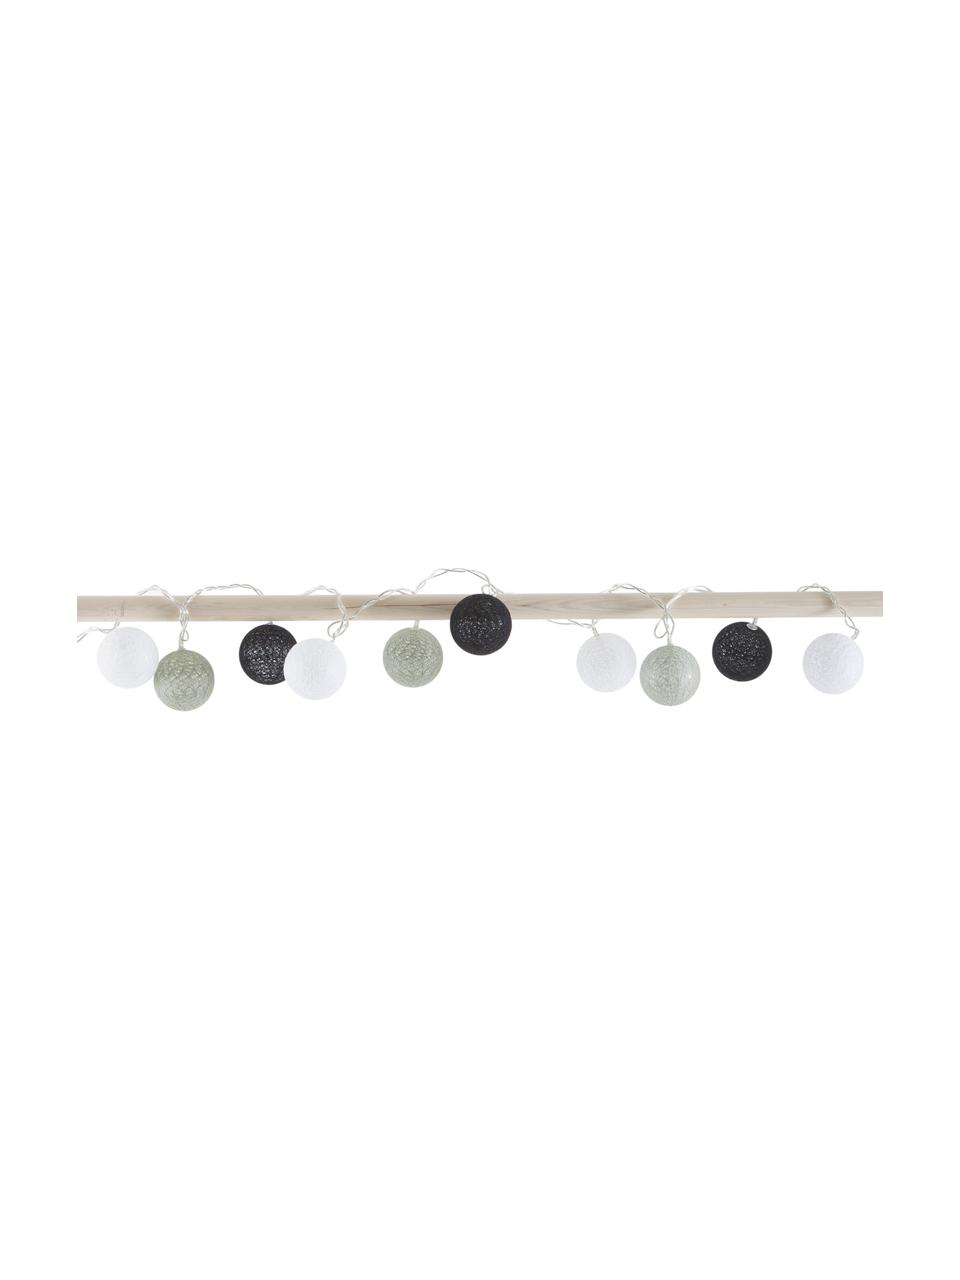 Guirnalda de luces Ball, 150 cm, Plástico, tela, Gris, negro, blanco, L 150 cm